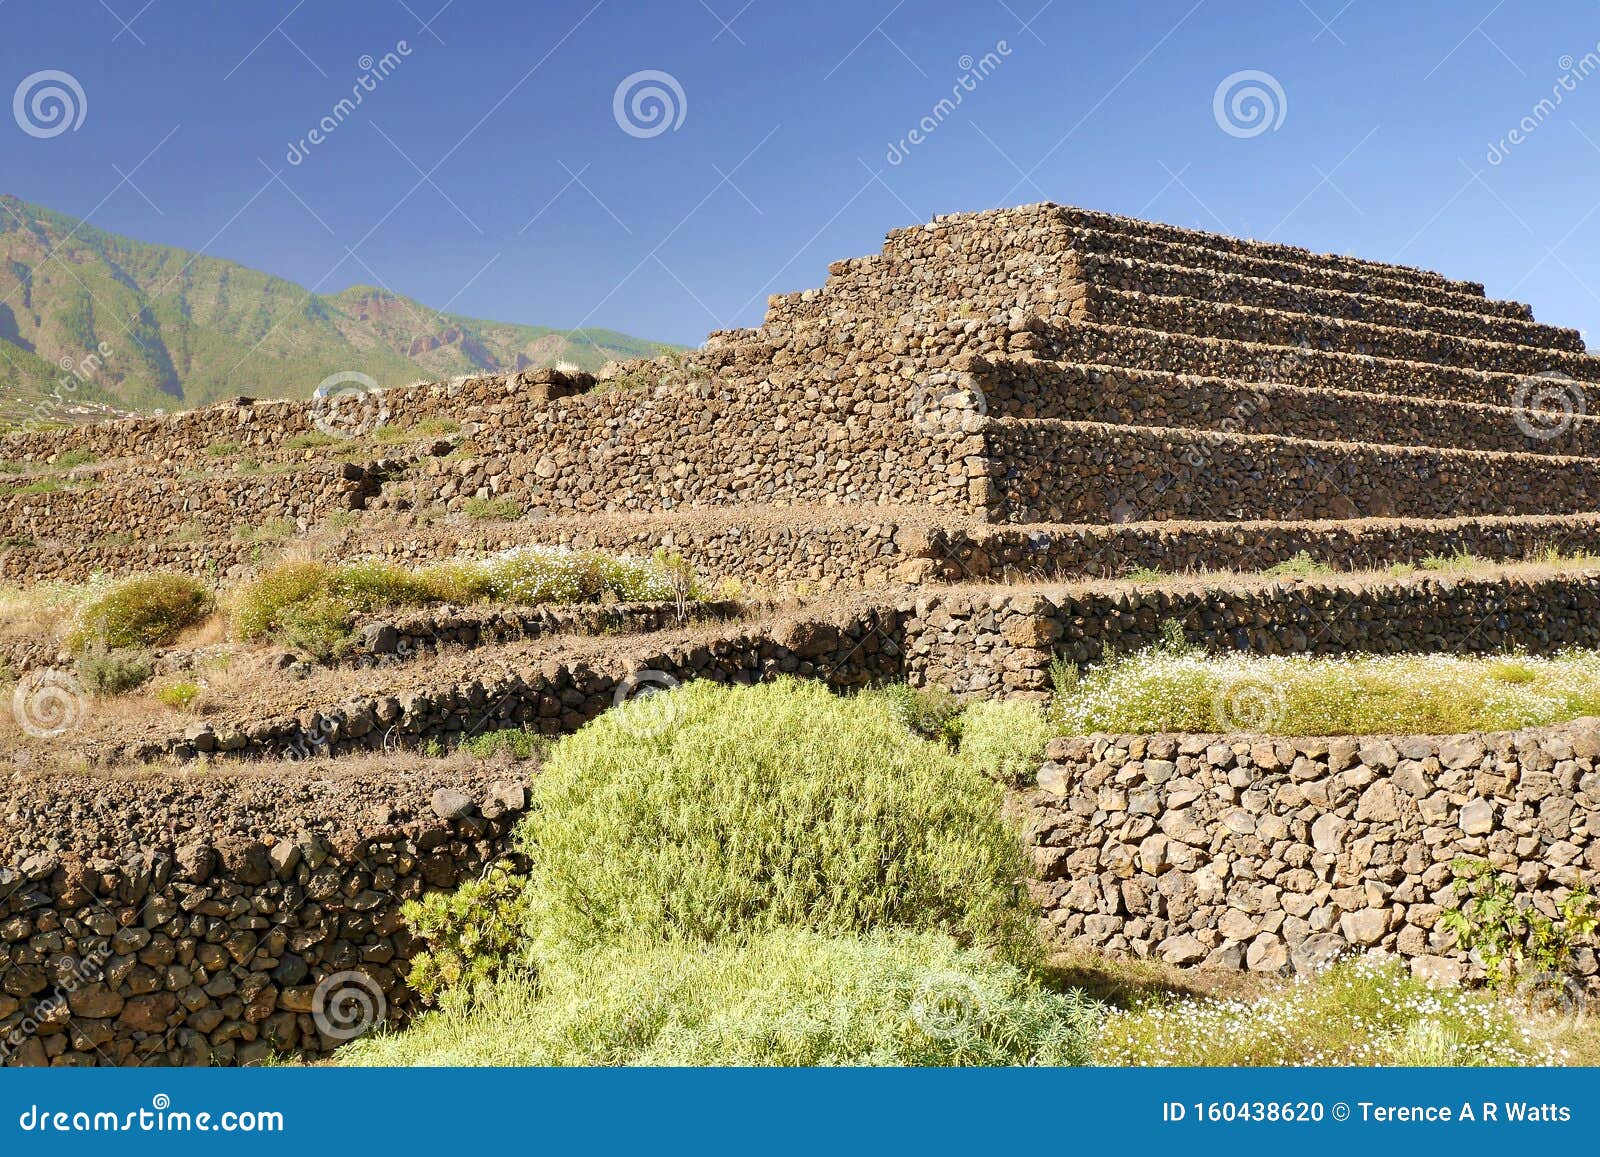 pyramids of guirmar. guirmar, tenerife, spain.